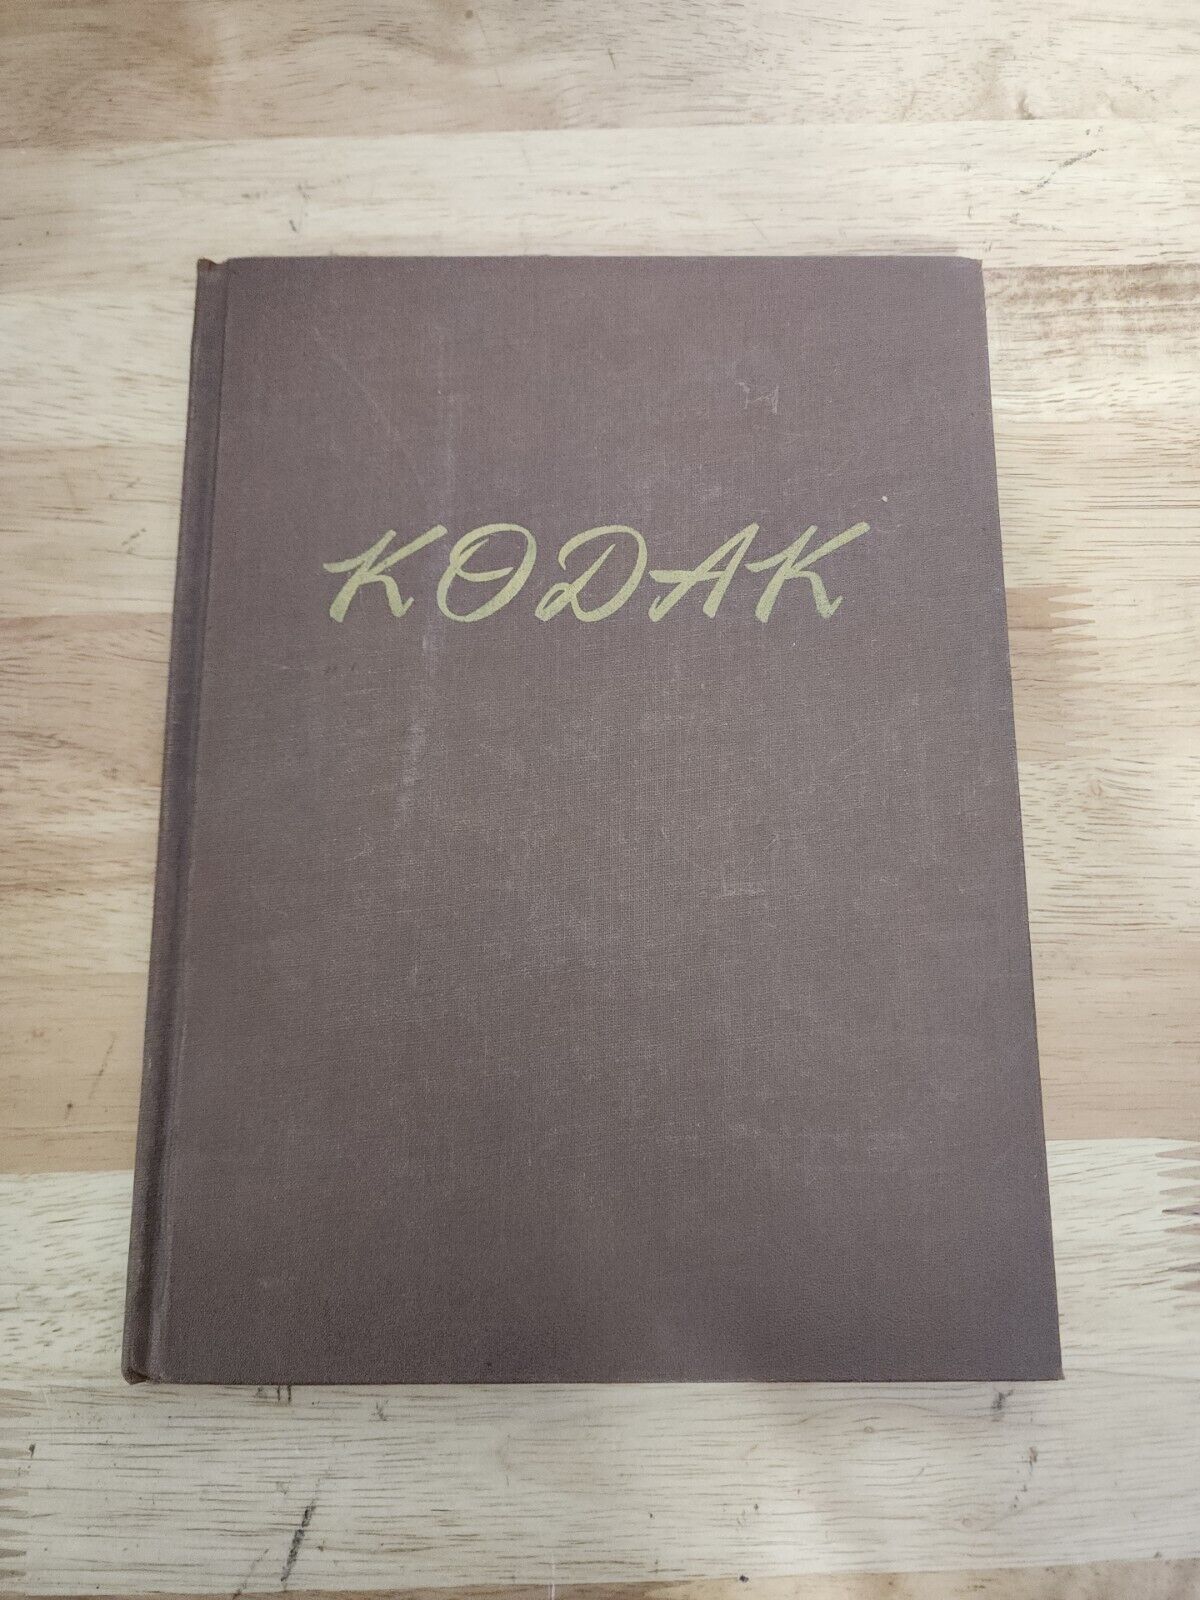 KODAK Kemper Hall-Kenosha Wisconsin-1948 YEARBOOK-Vol XXXI